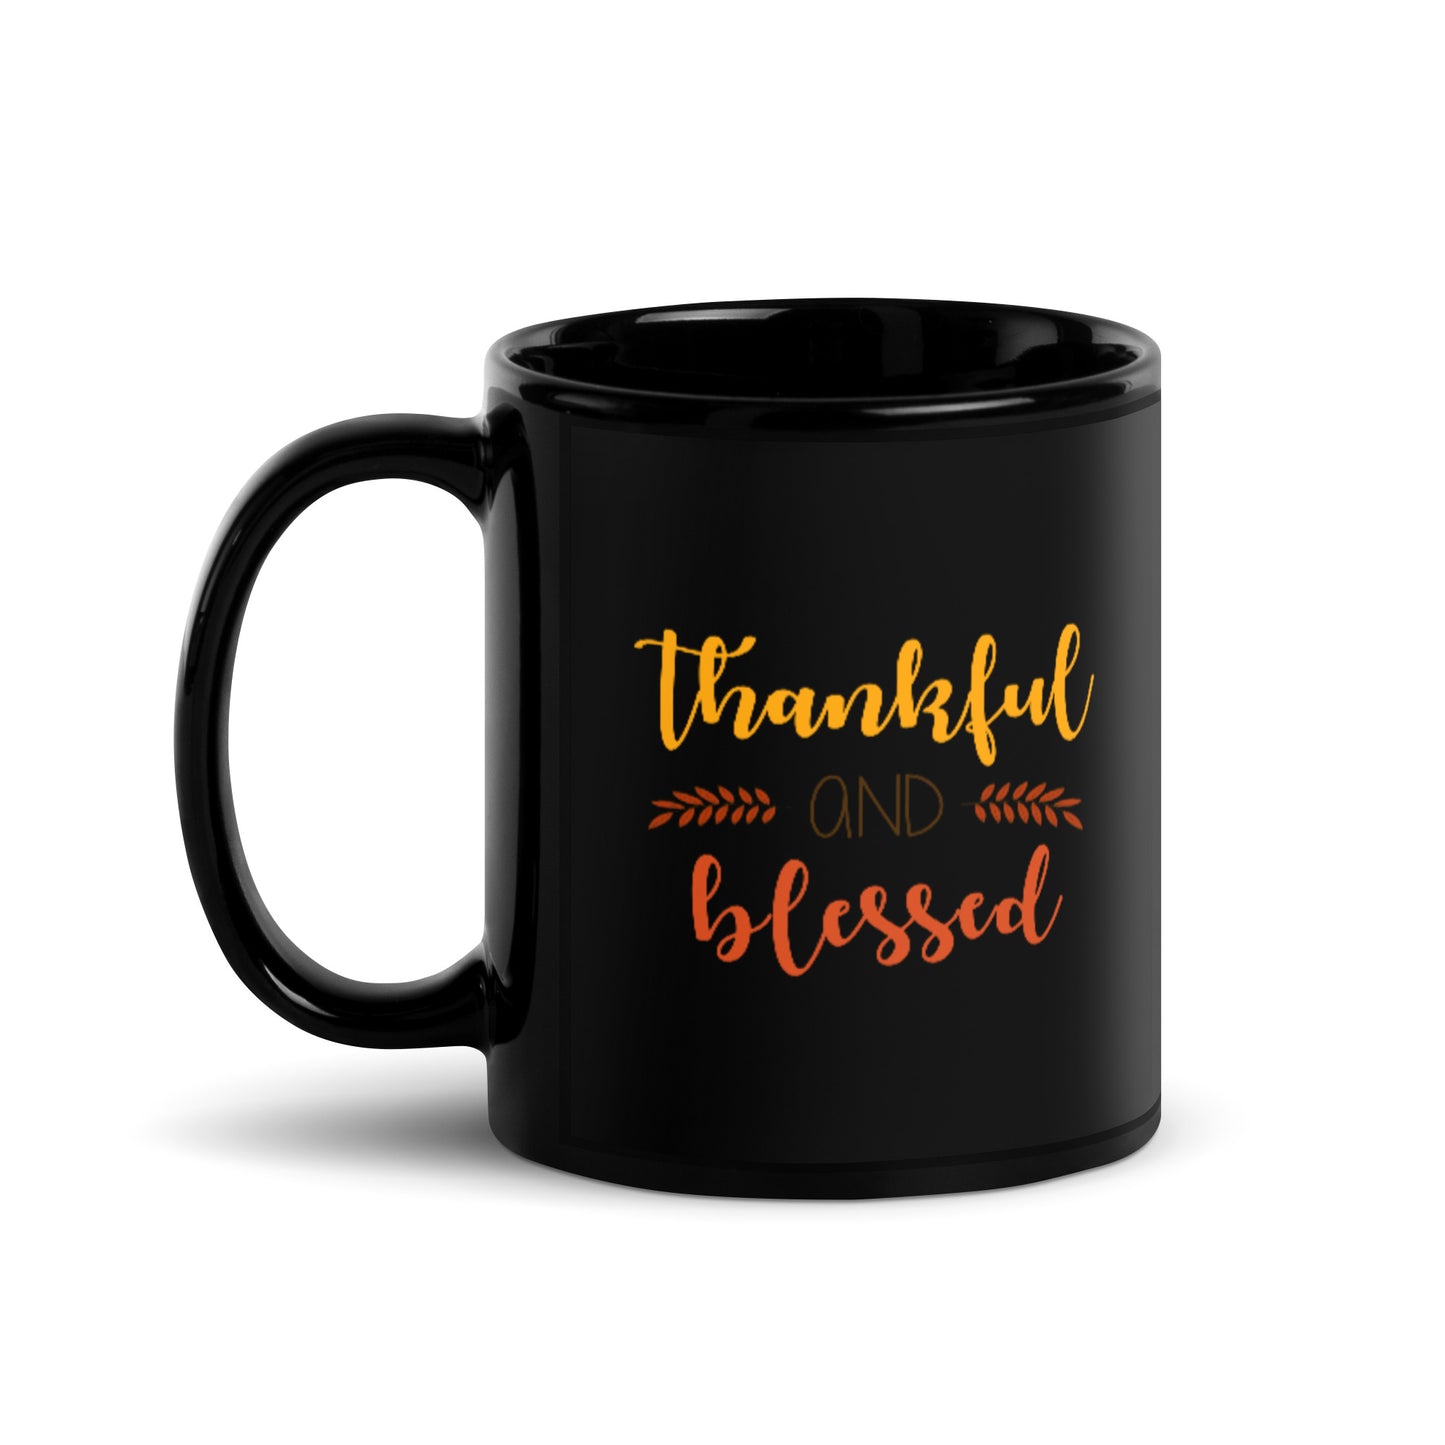 Thankful and Blessed Black Glossy Mug